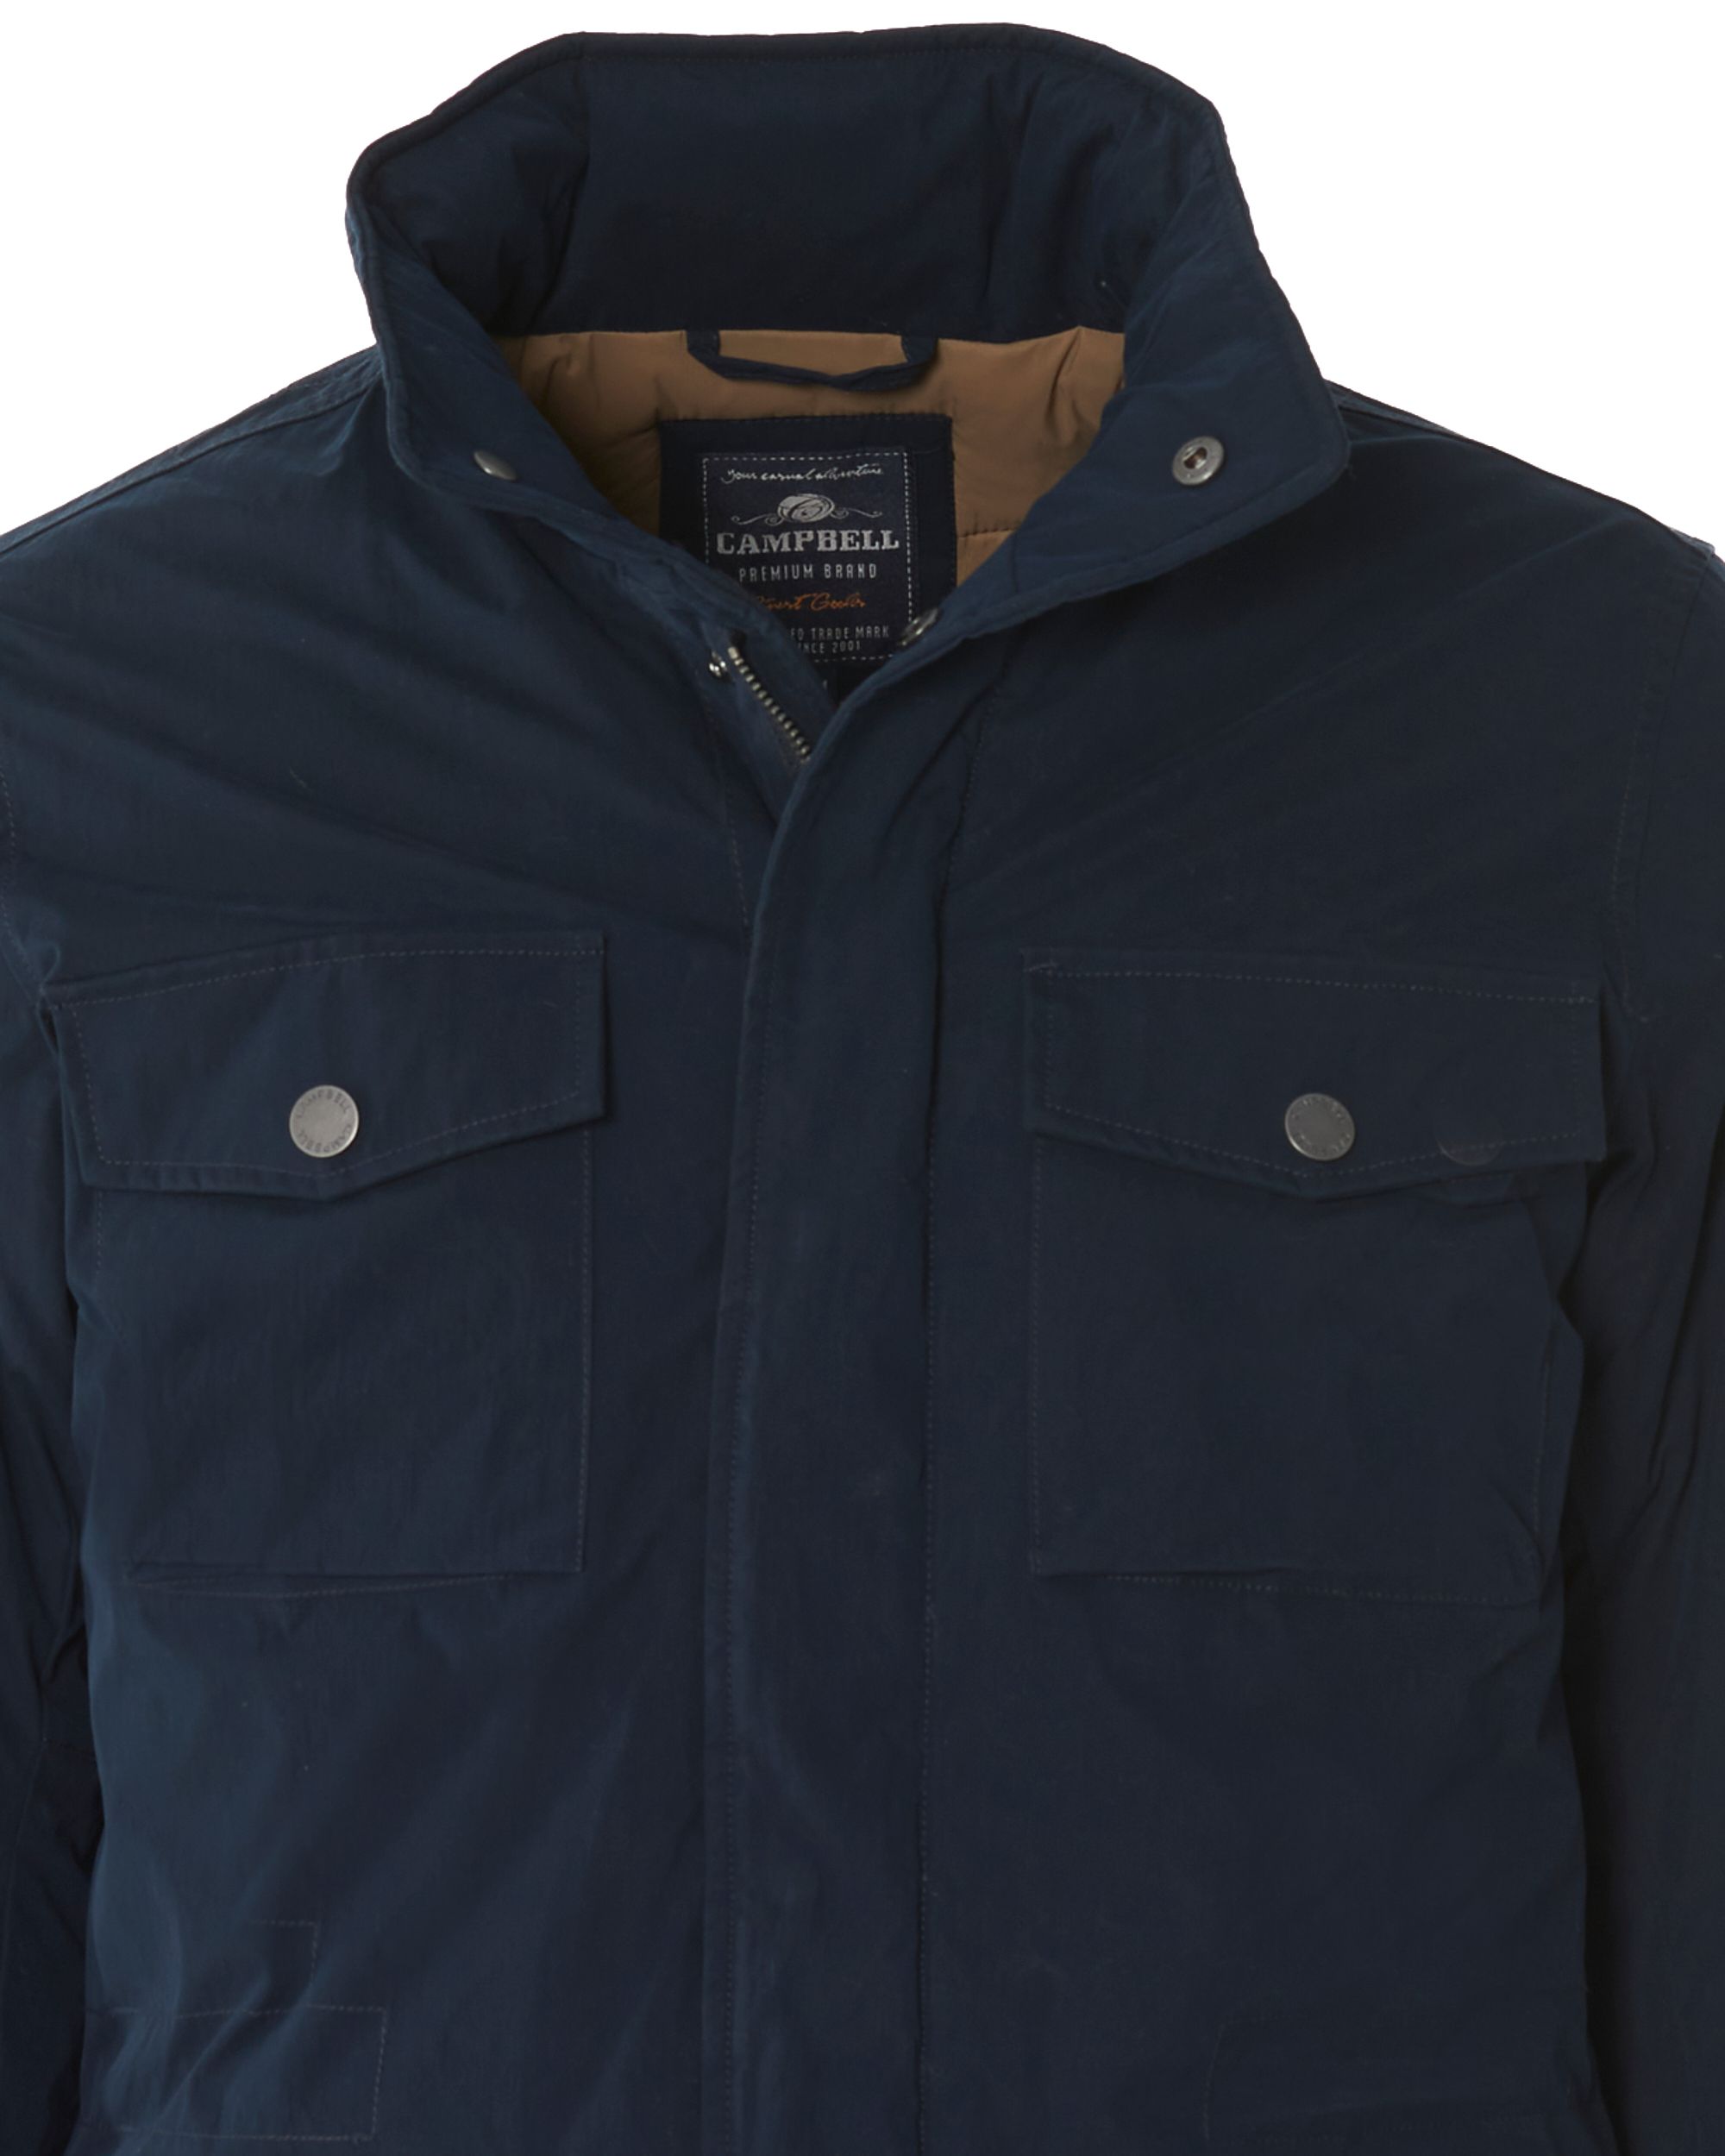 Campbell Classic Charleston Gewatteerde jas Donkerblauw uni 077551-002-L